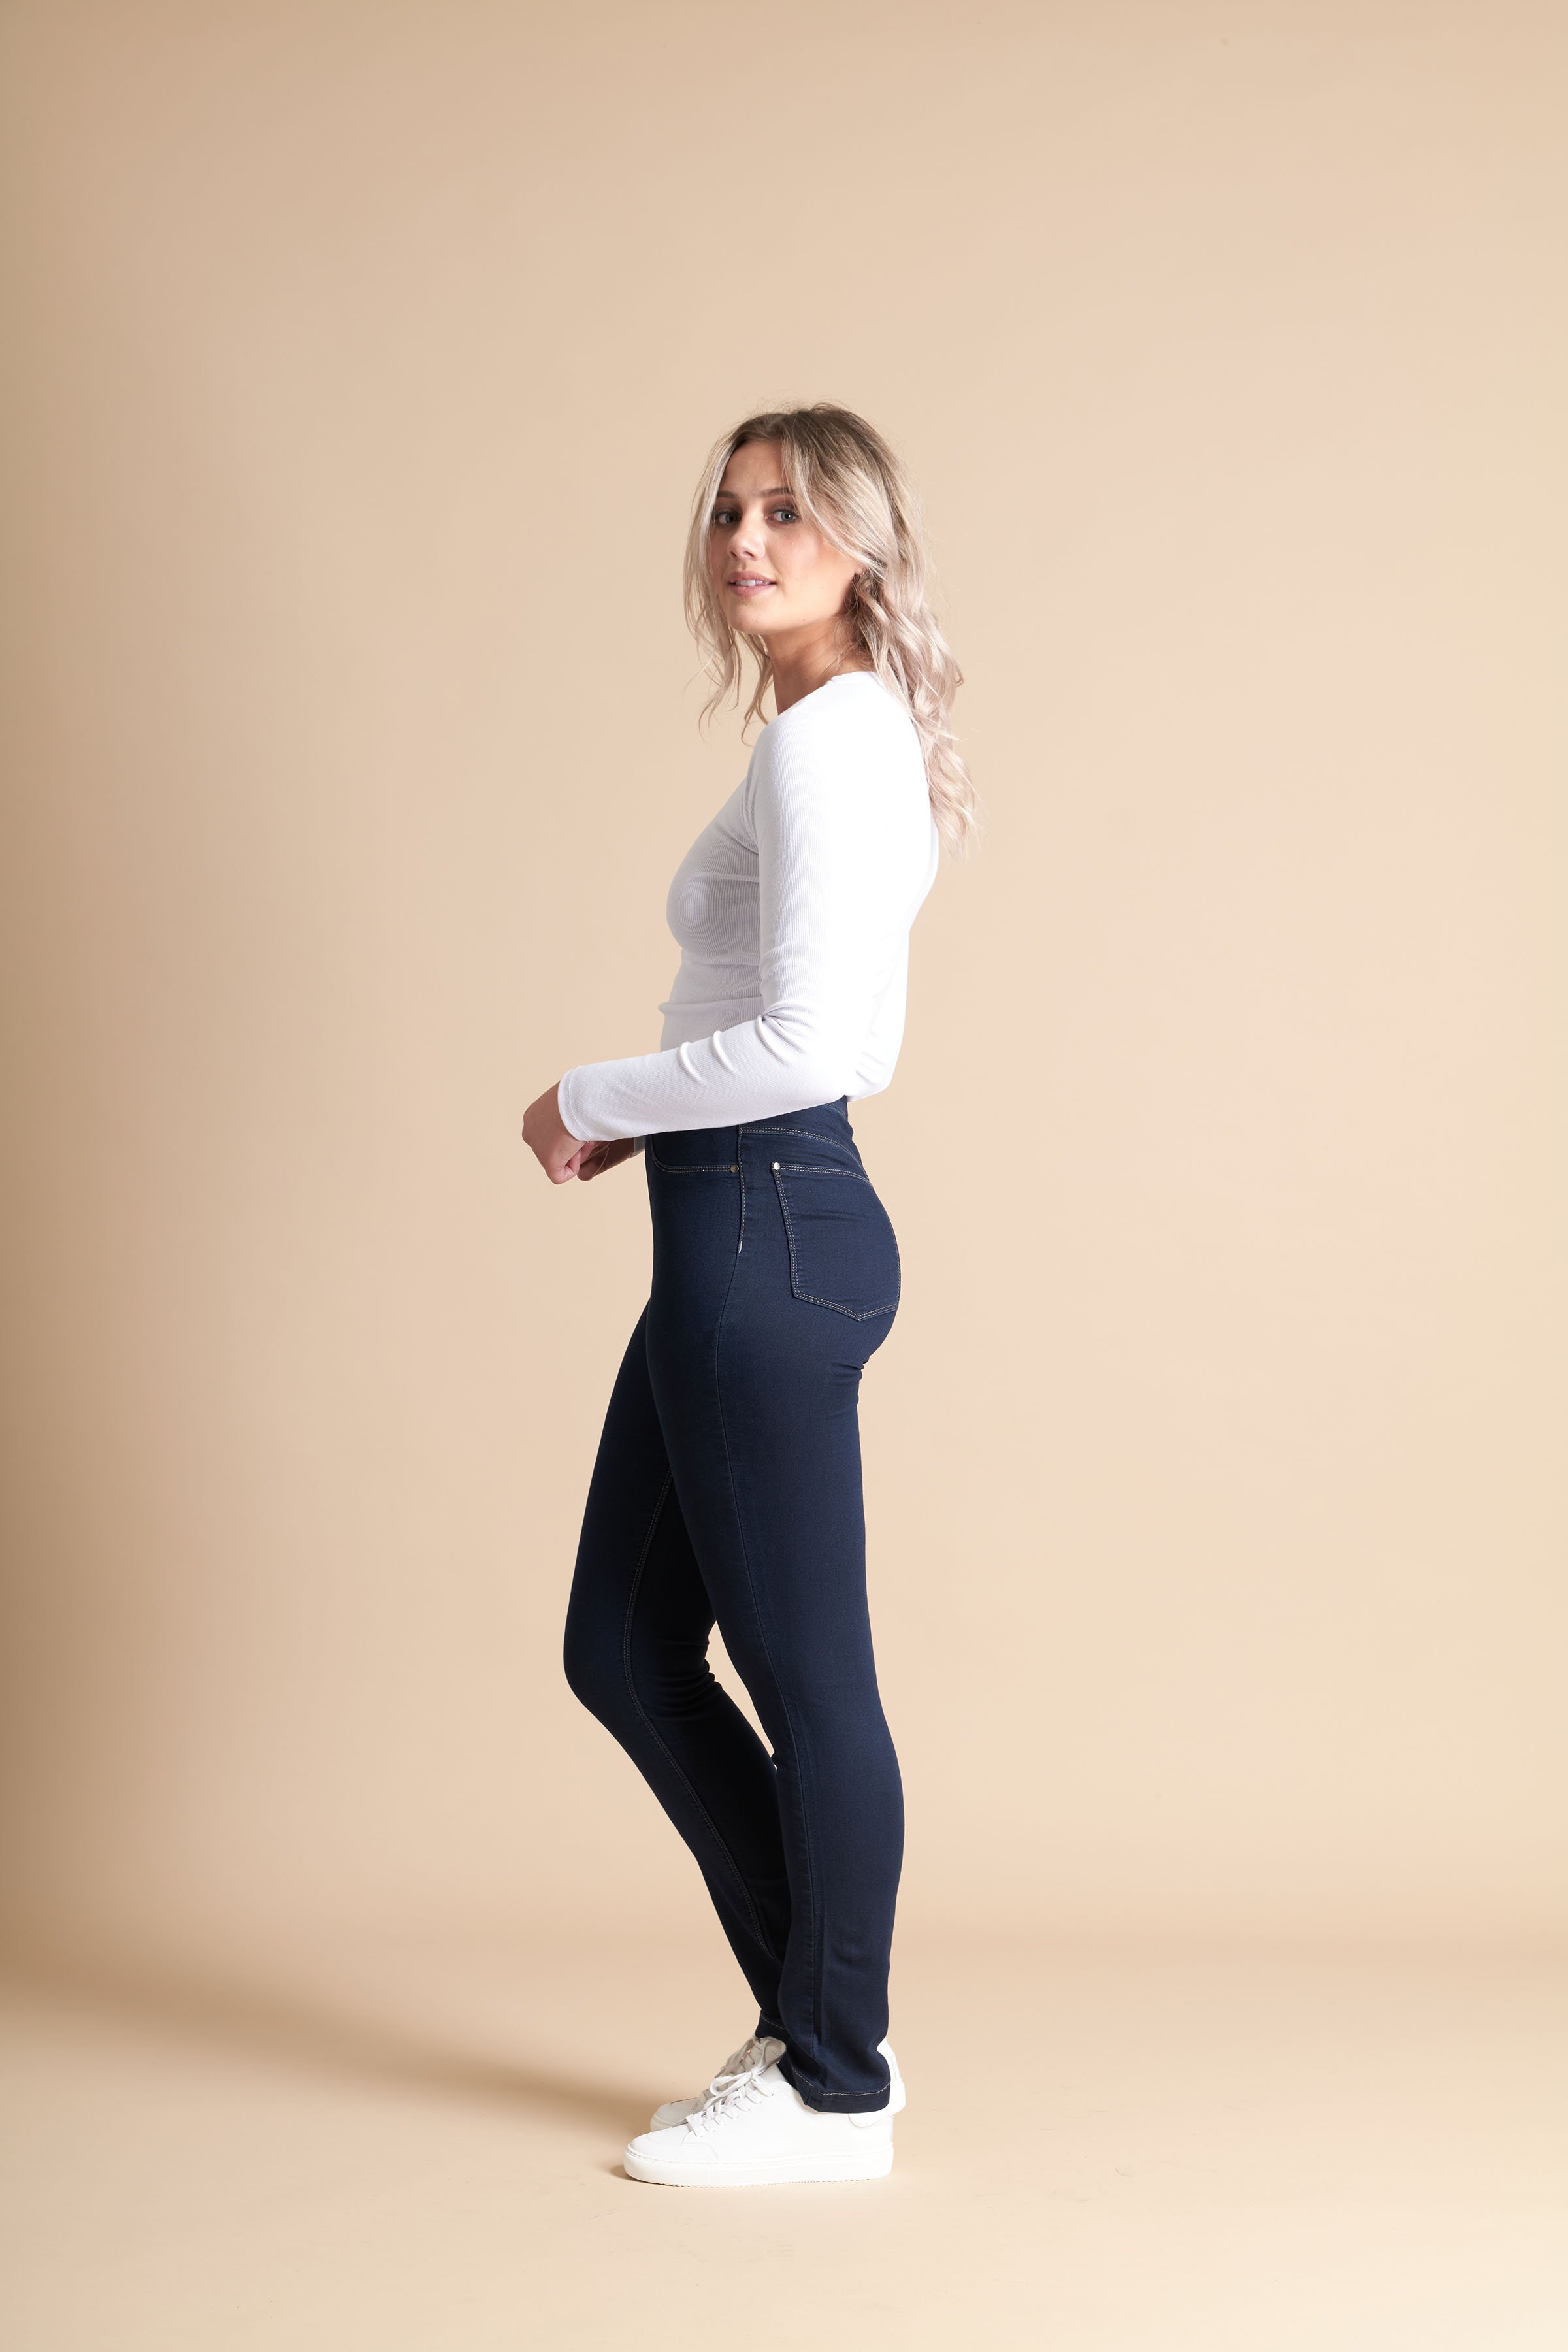 MACJAYS CALIFORNIA STRETCH PULL ON JEAN - Jeans : Status Clothing - MACJAYS  S 22